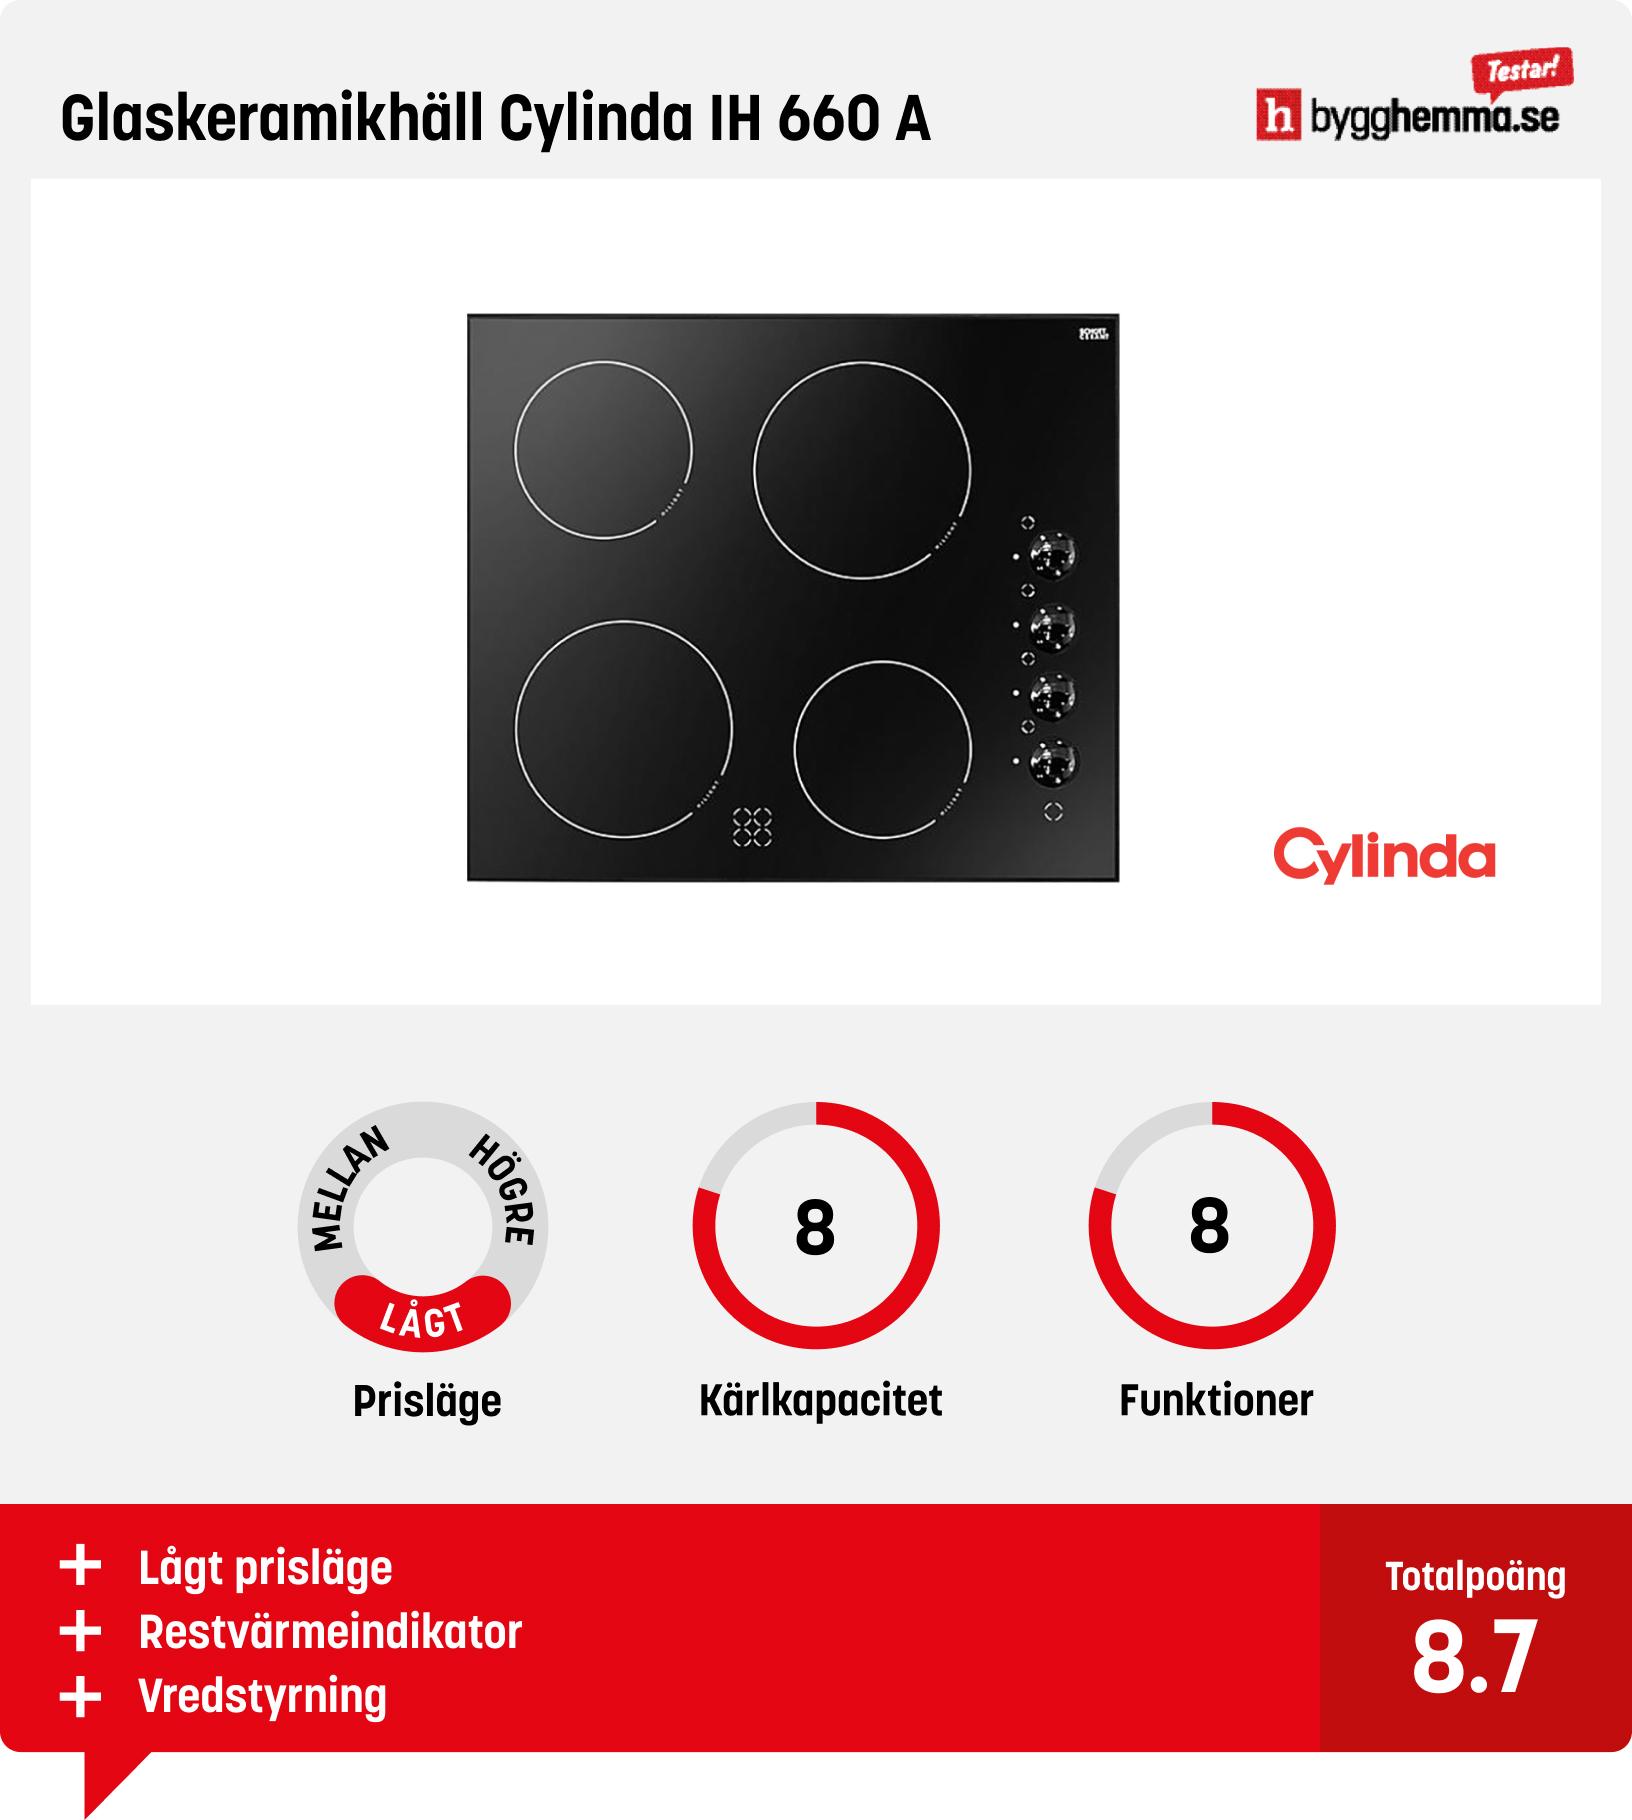 Glaskeramikhäll bäst i test - Glaskeramikhäll Cylinda IH 660 A